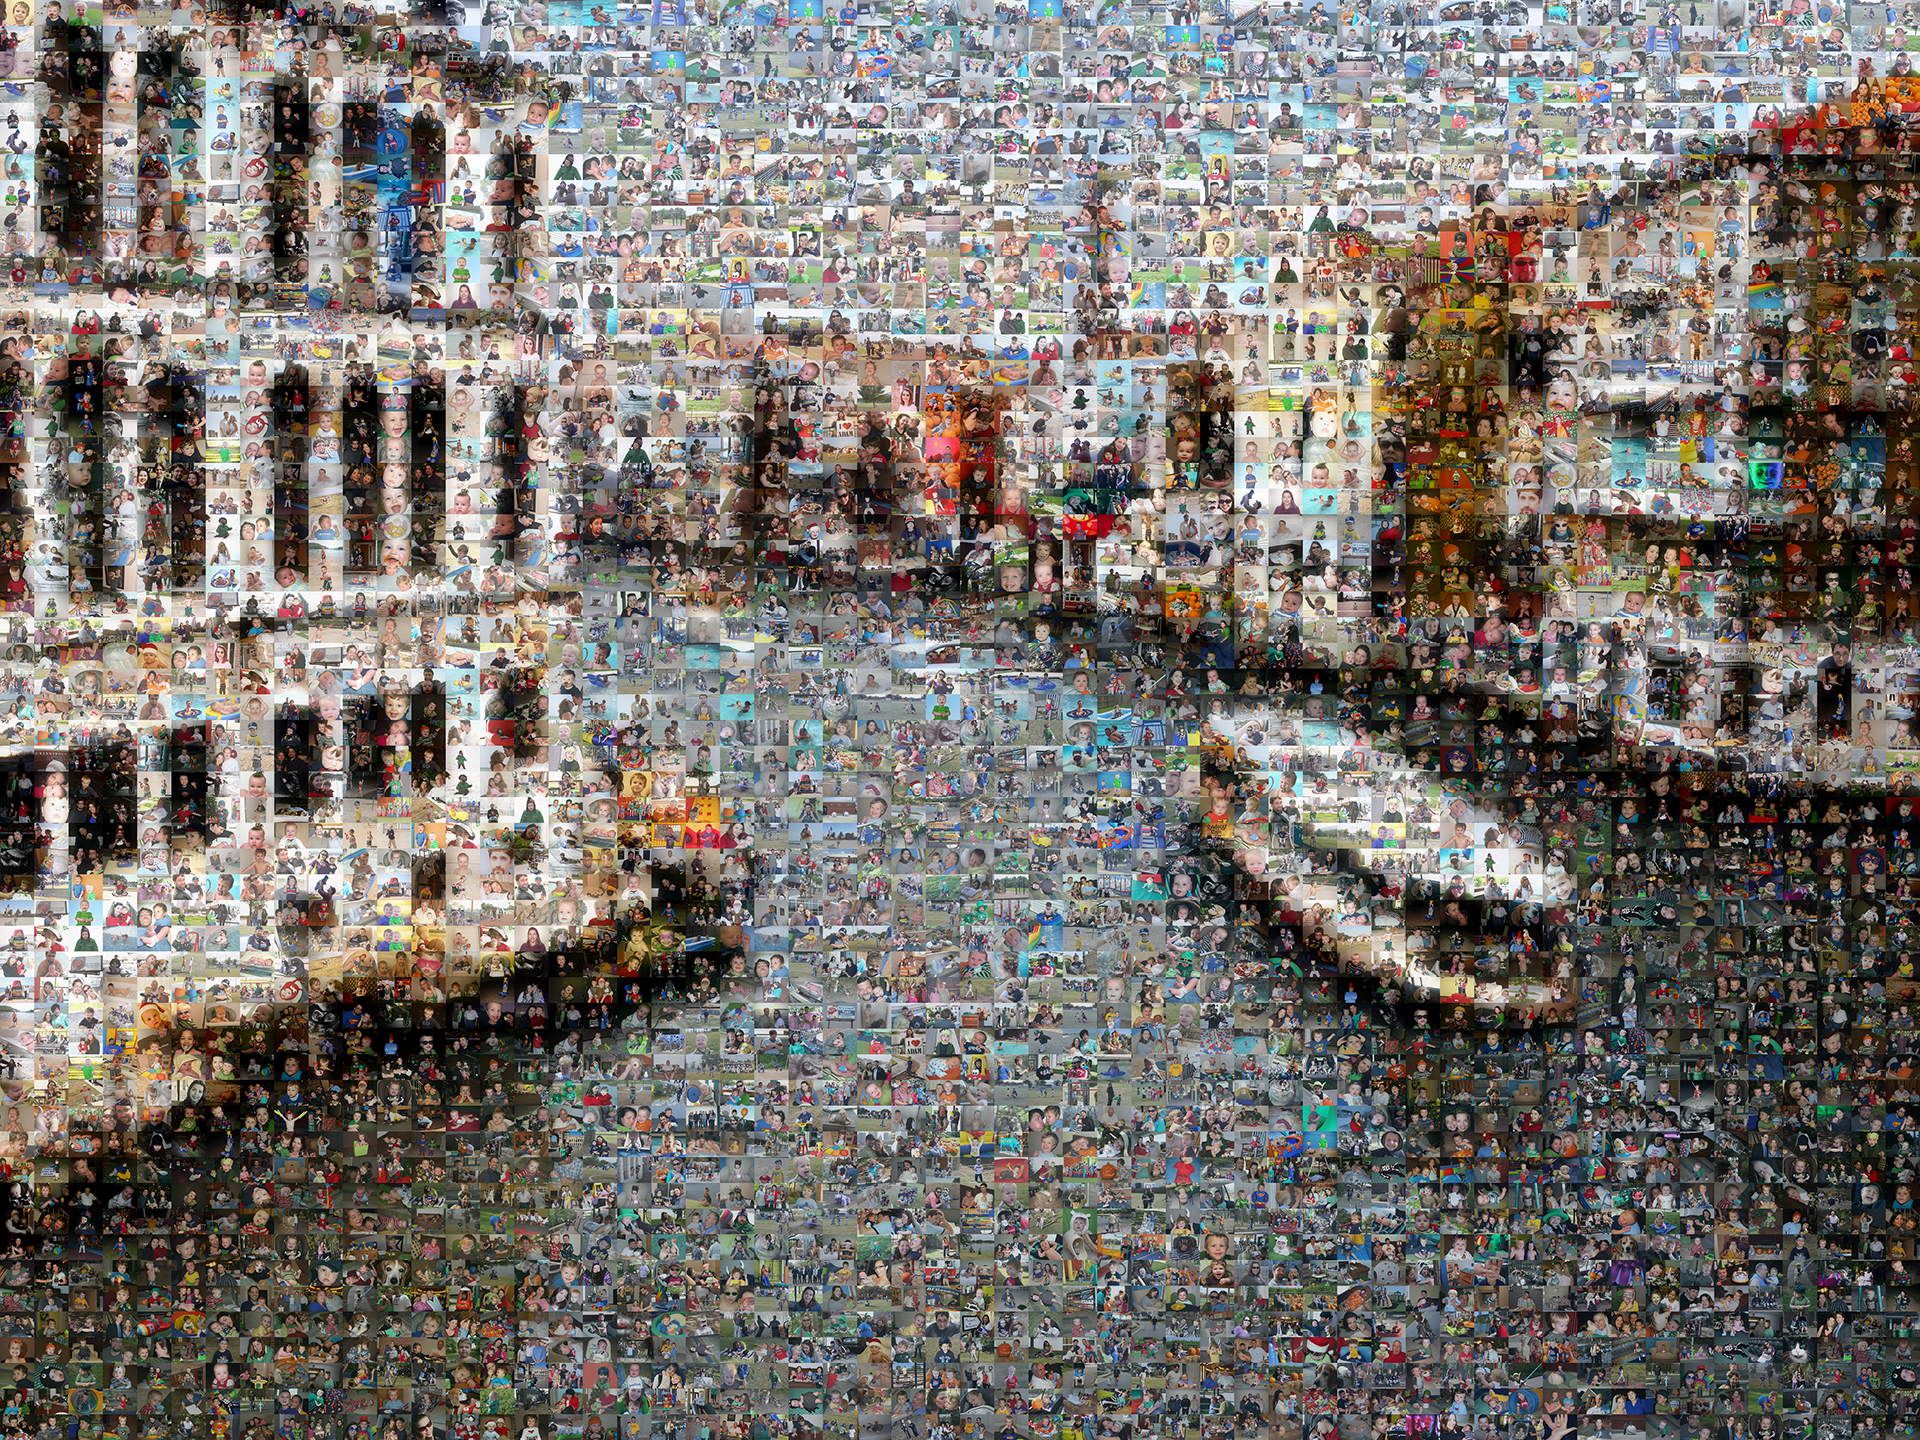 photo mosaic created using 1785 family photos